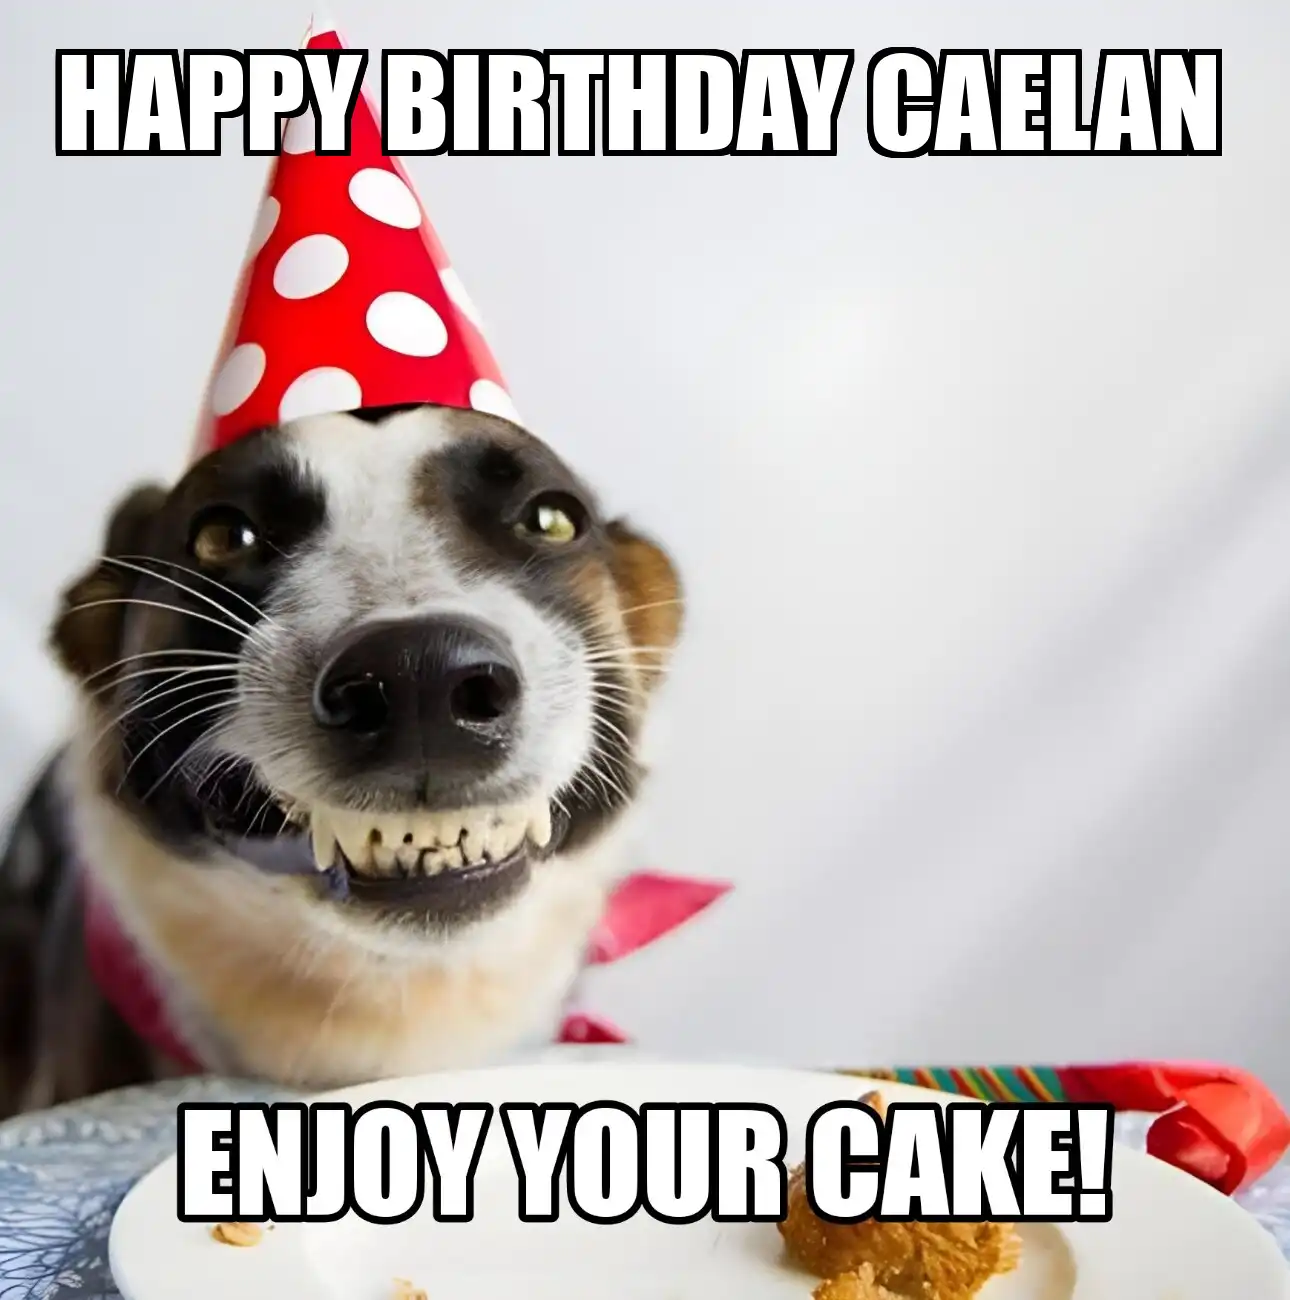 Happy Birthday Caelan Enjoy Your Cake Dog Meme